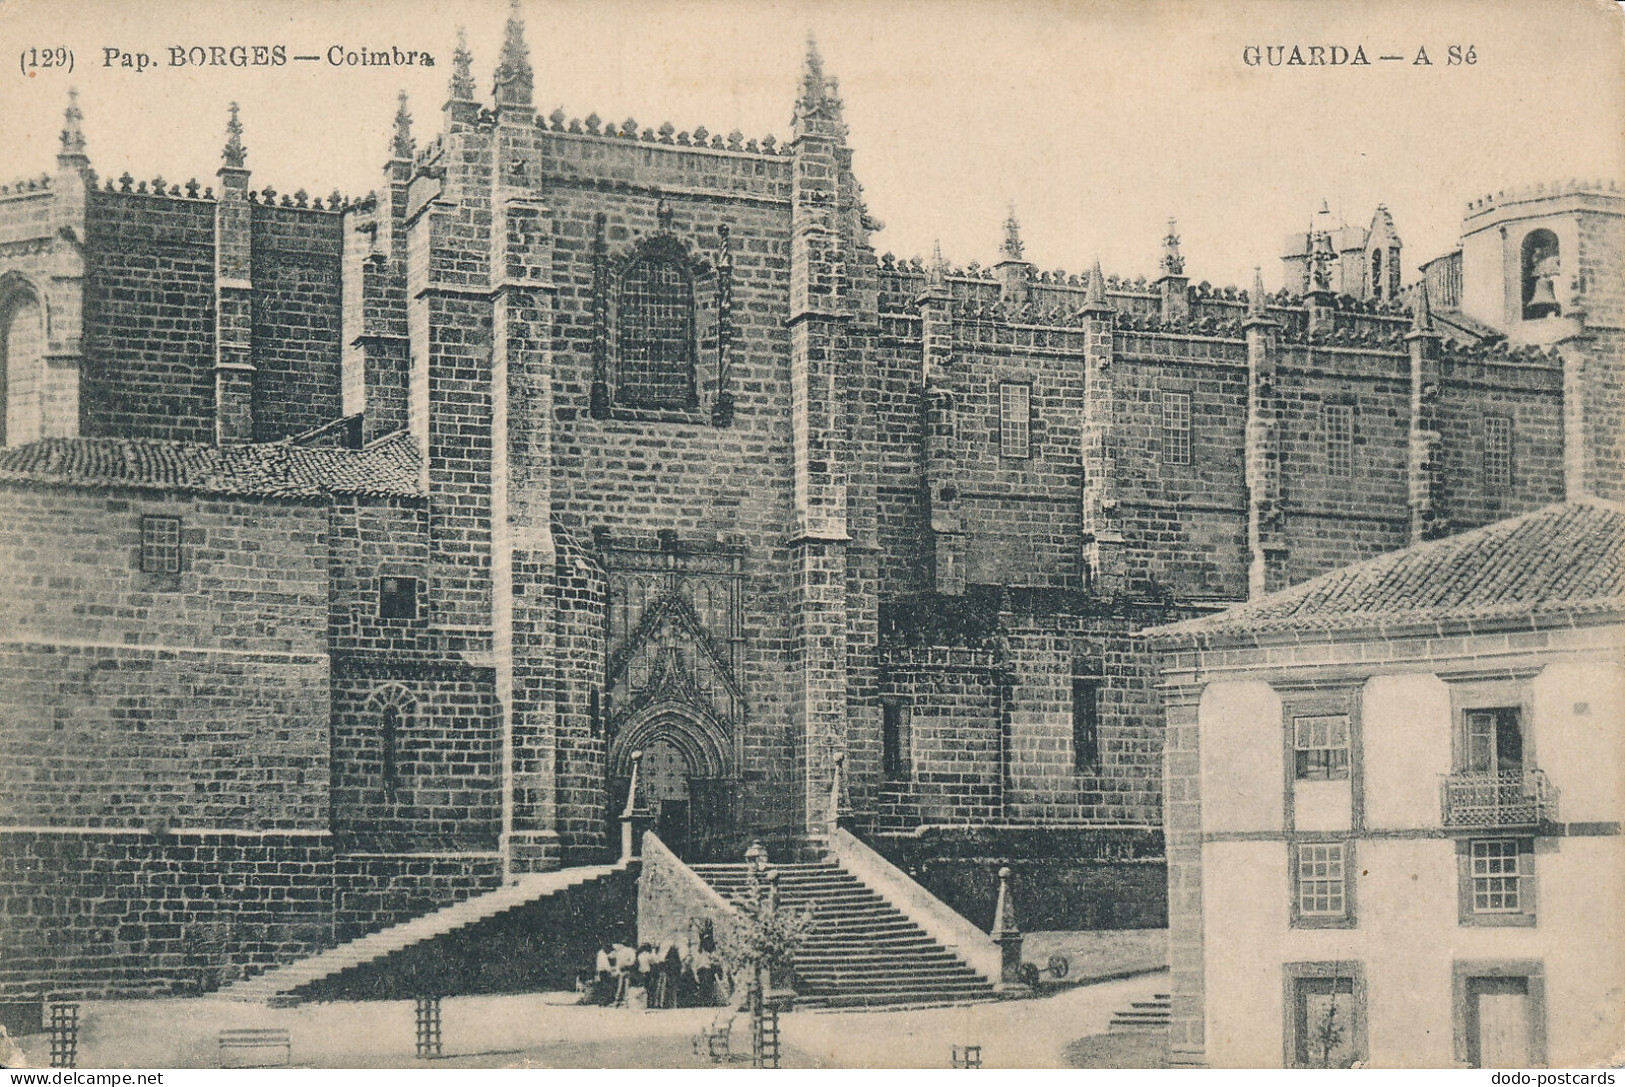 PC42713 Pap. Borges. Coimbra. Guarda - World